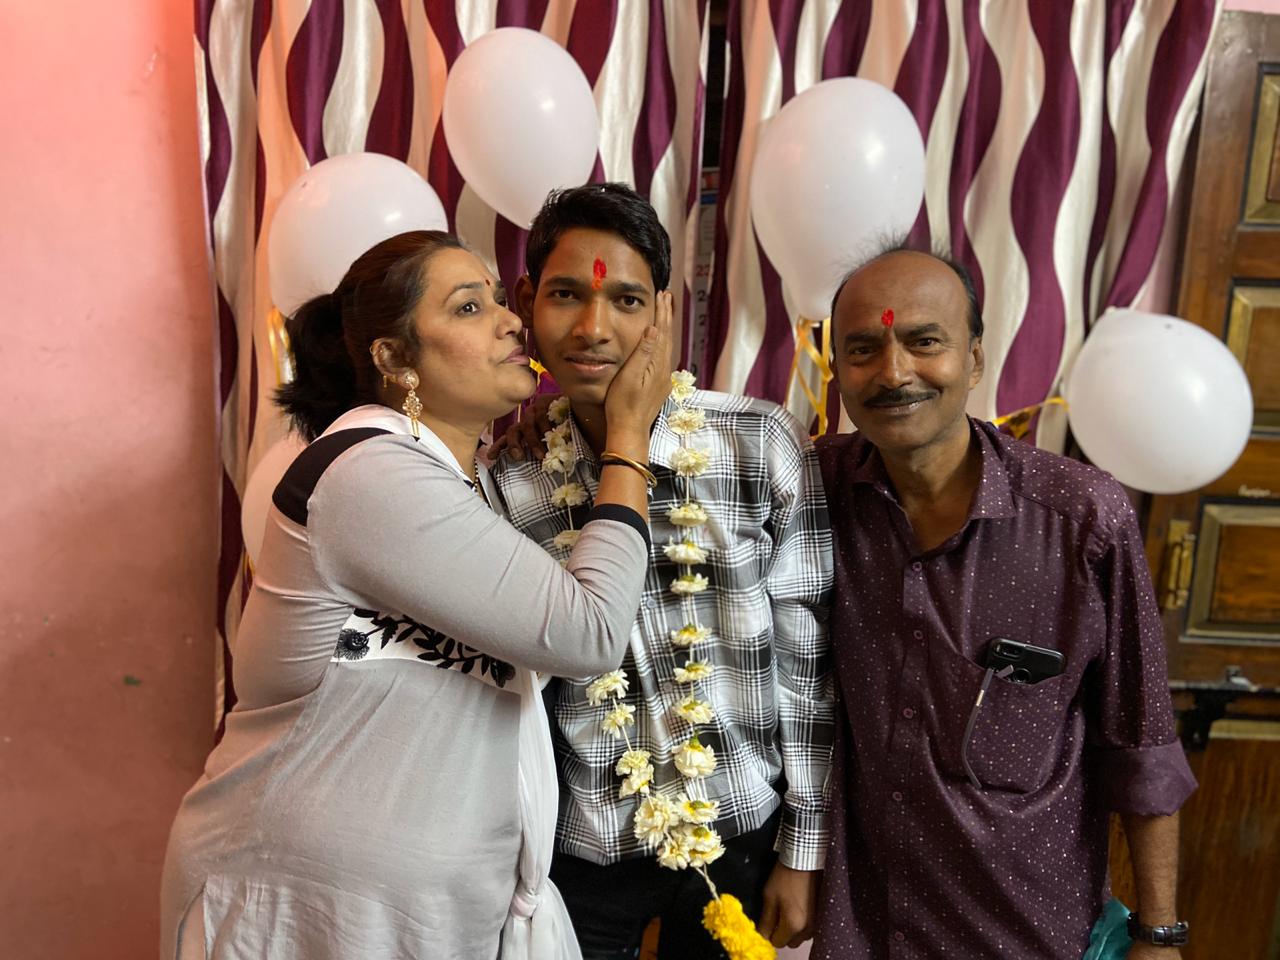 Aadhaar helps reunite with family